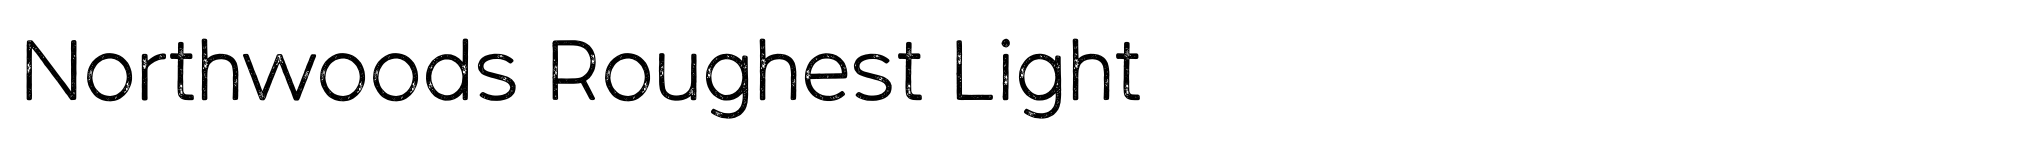 Northwoods Roughest Light image